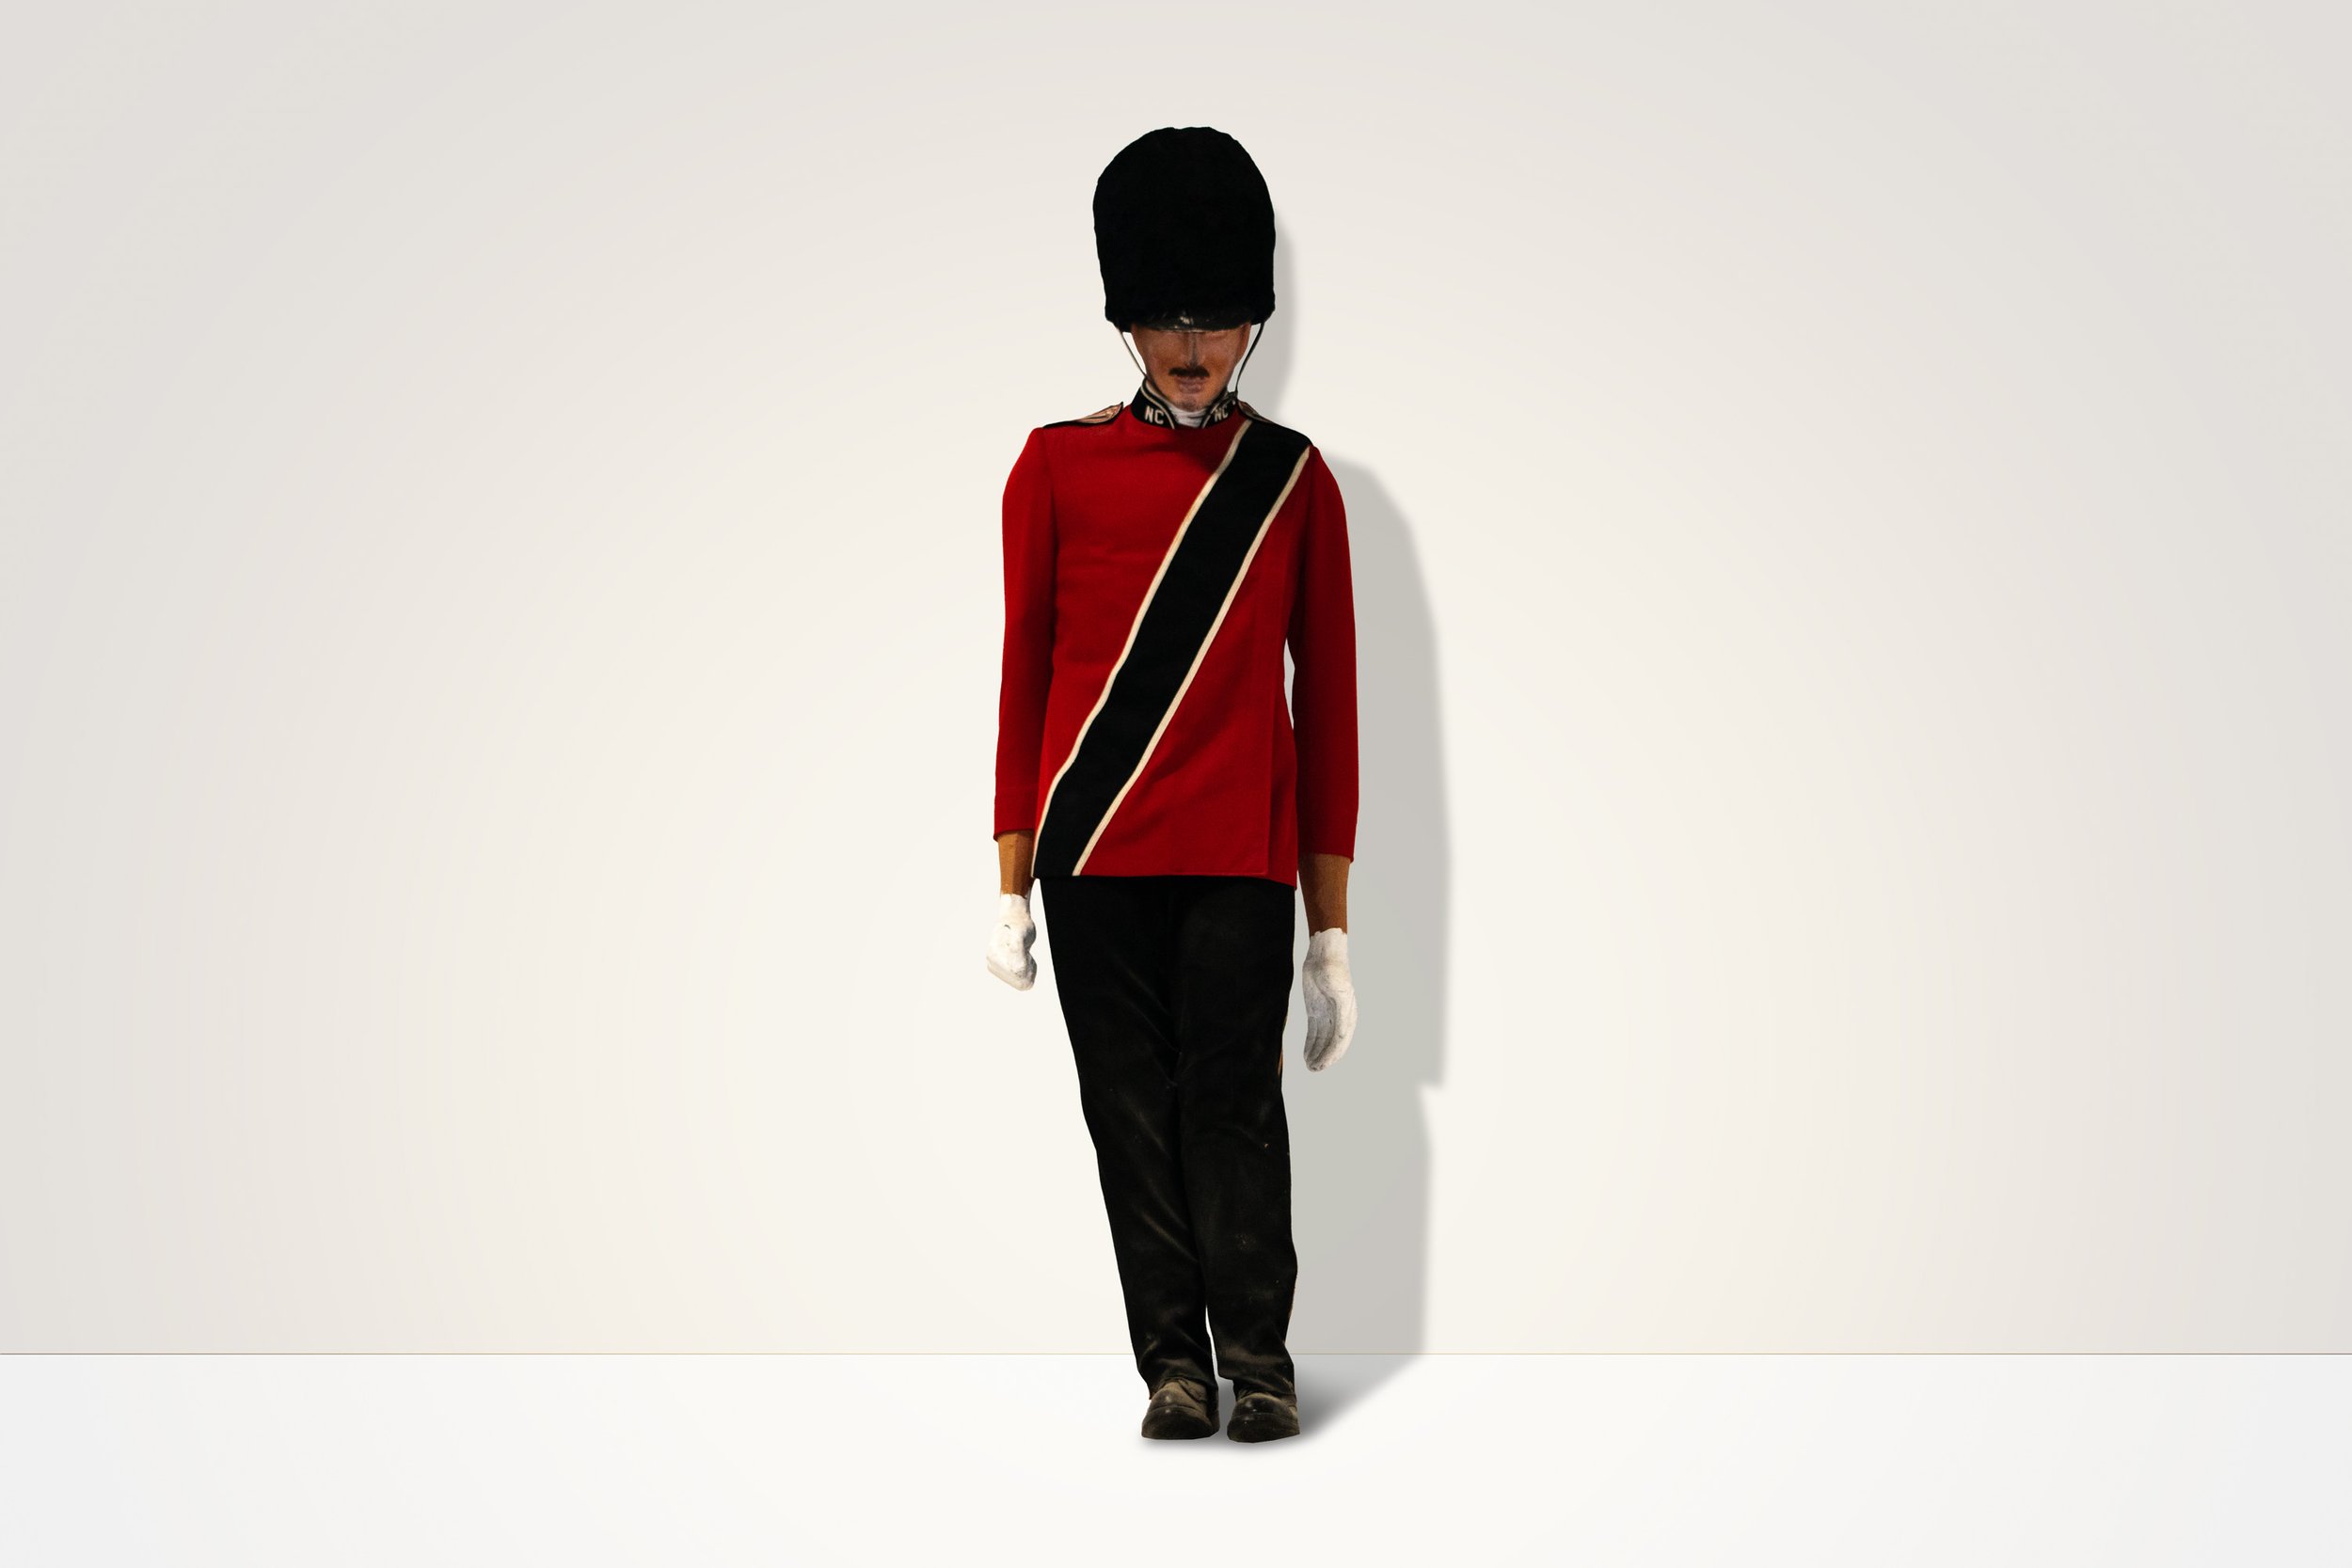 The London Guard